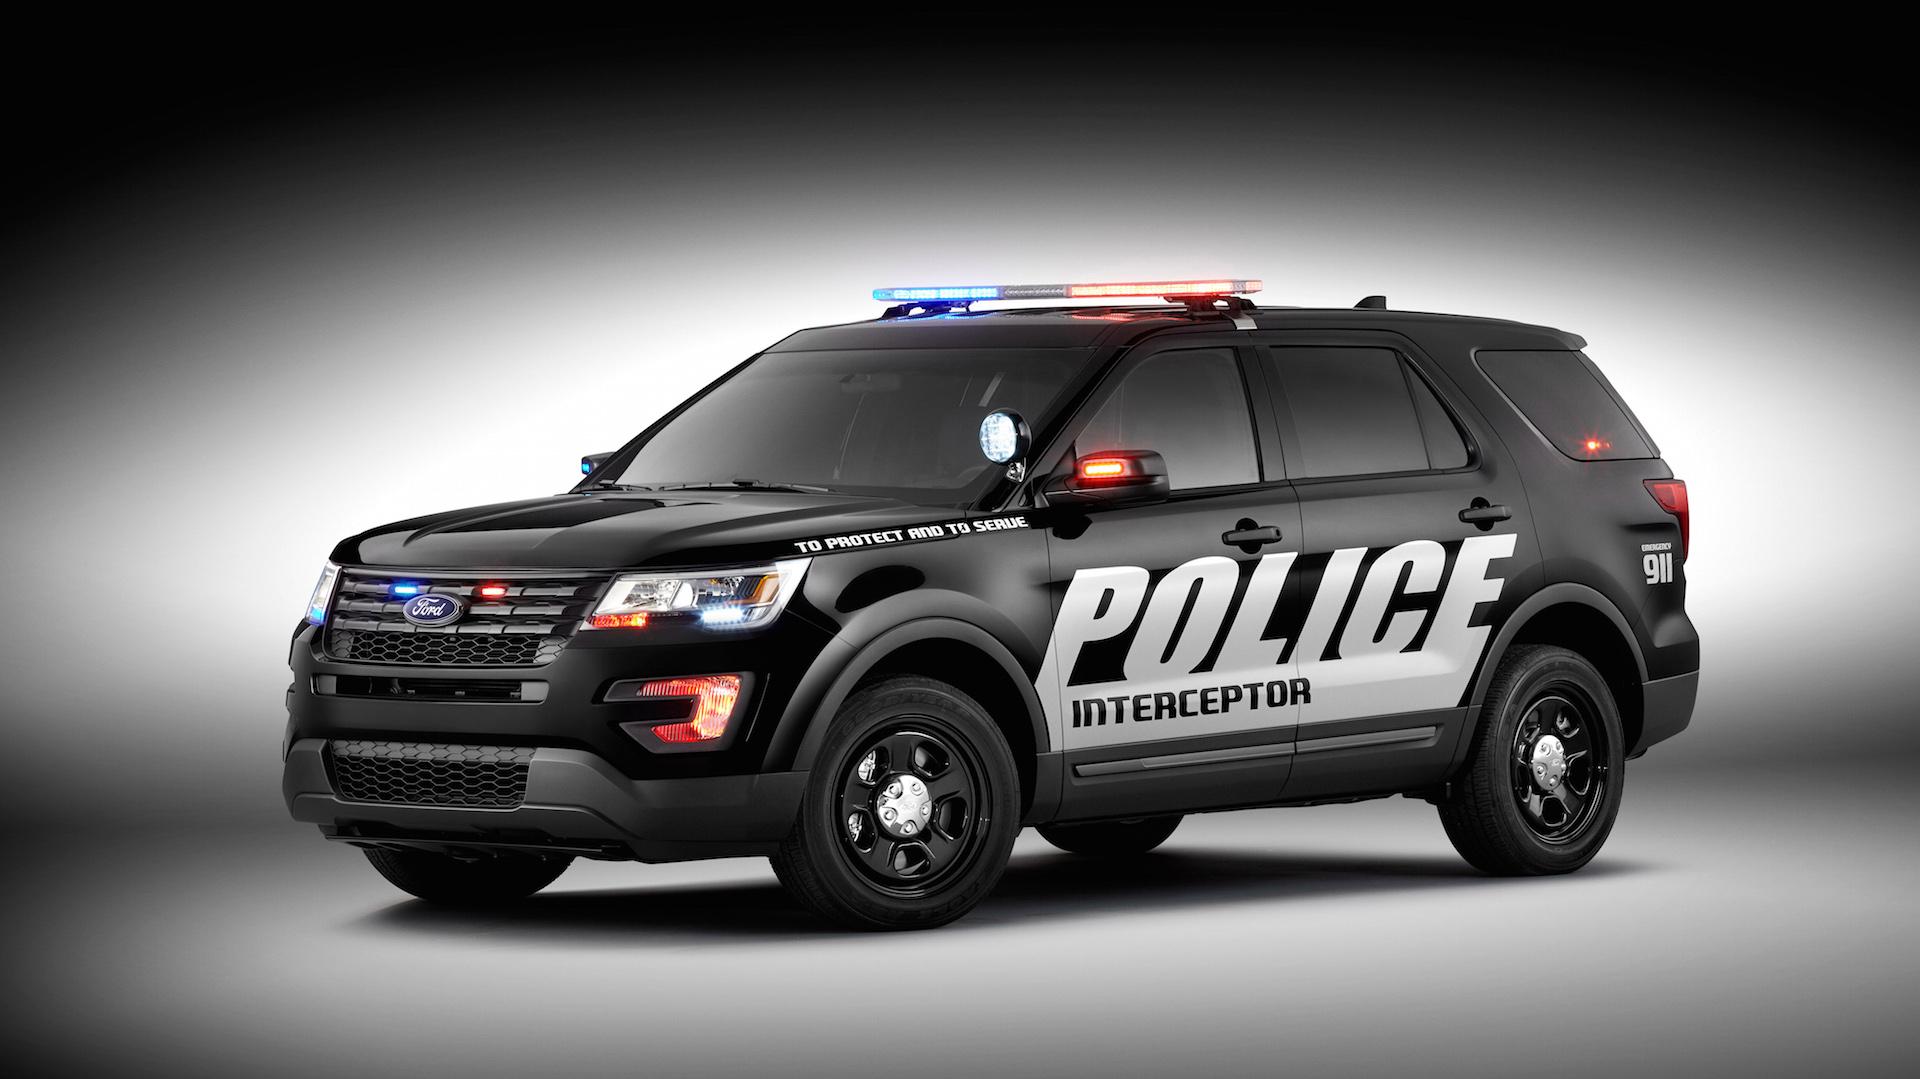 2016 Ford Police Interceptor Wallpaper   HD Car Wallpapers 5146